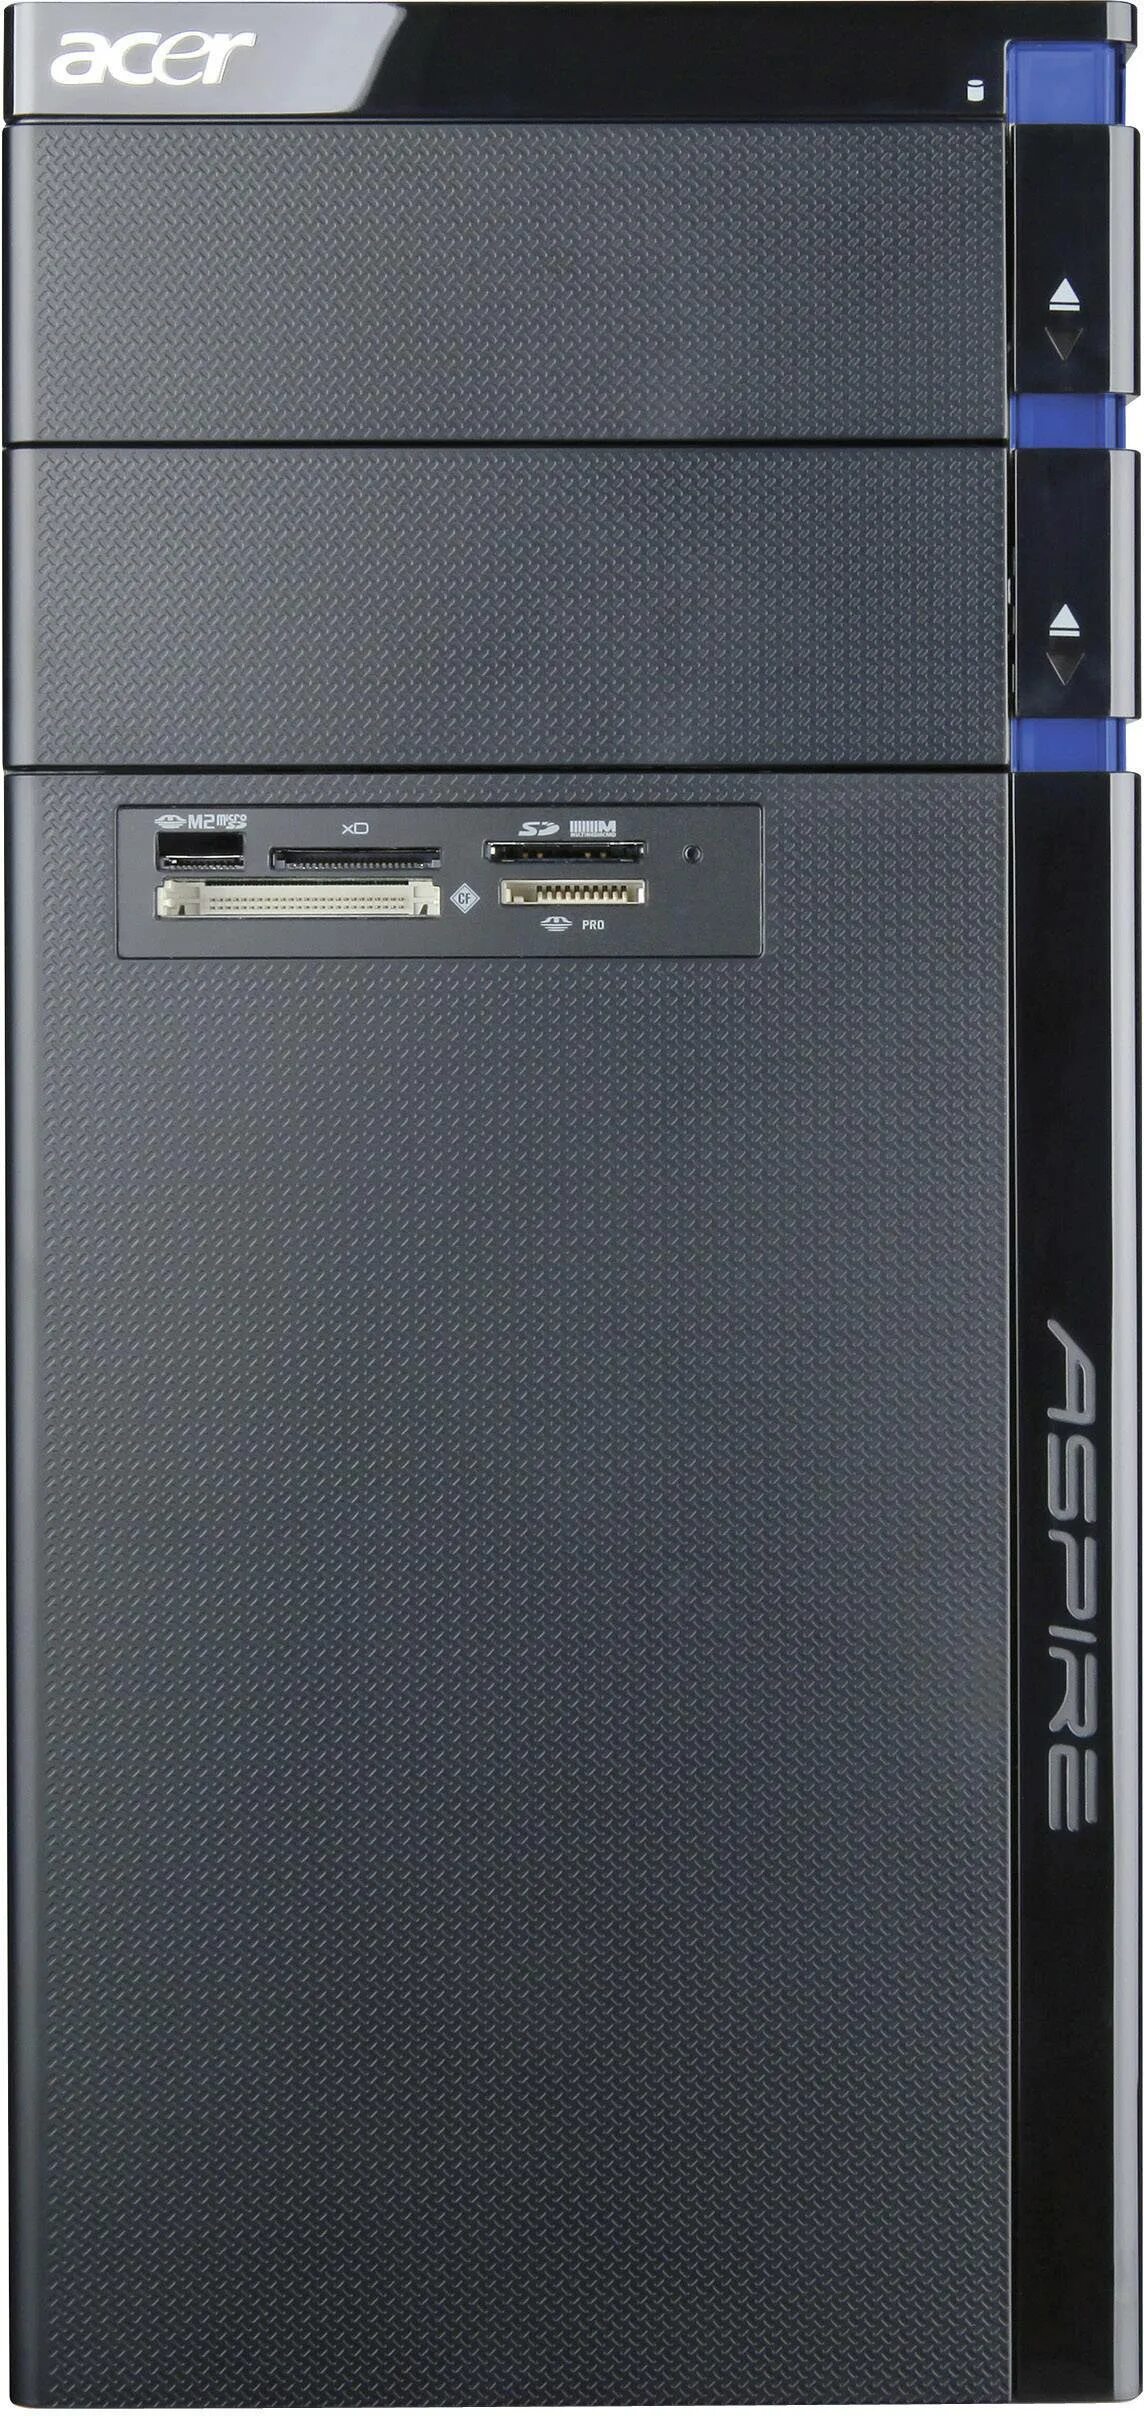 Aspire m. Компьютер Acer Aspire m5400. Acer Aspire m3910 системный блок. Системный блок Acer Aspire m3400. ПК Acer Aspire m3920.